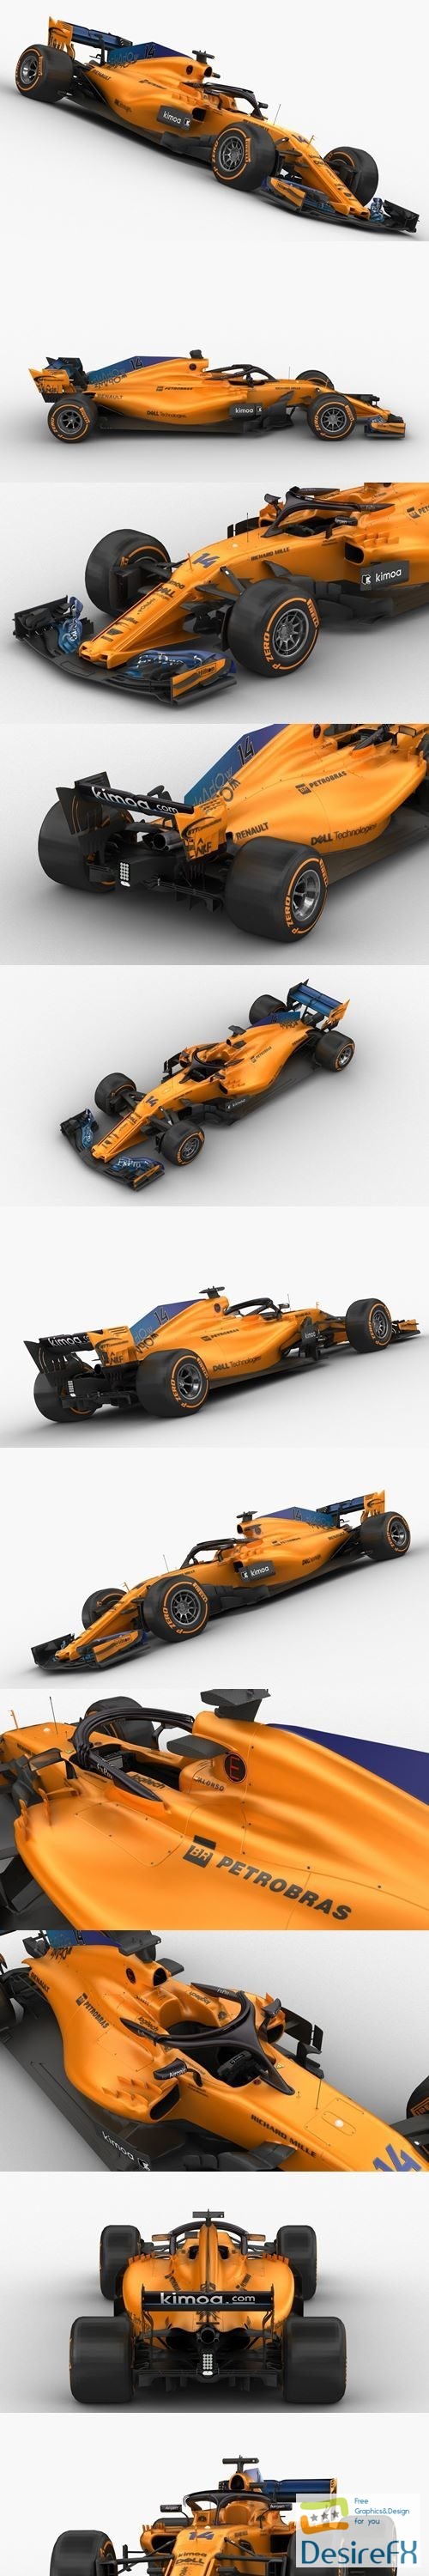 F1 McLaren MCL33 2018 3D Model